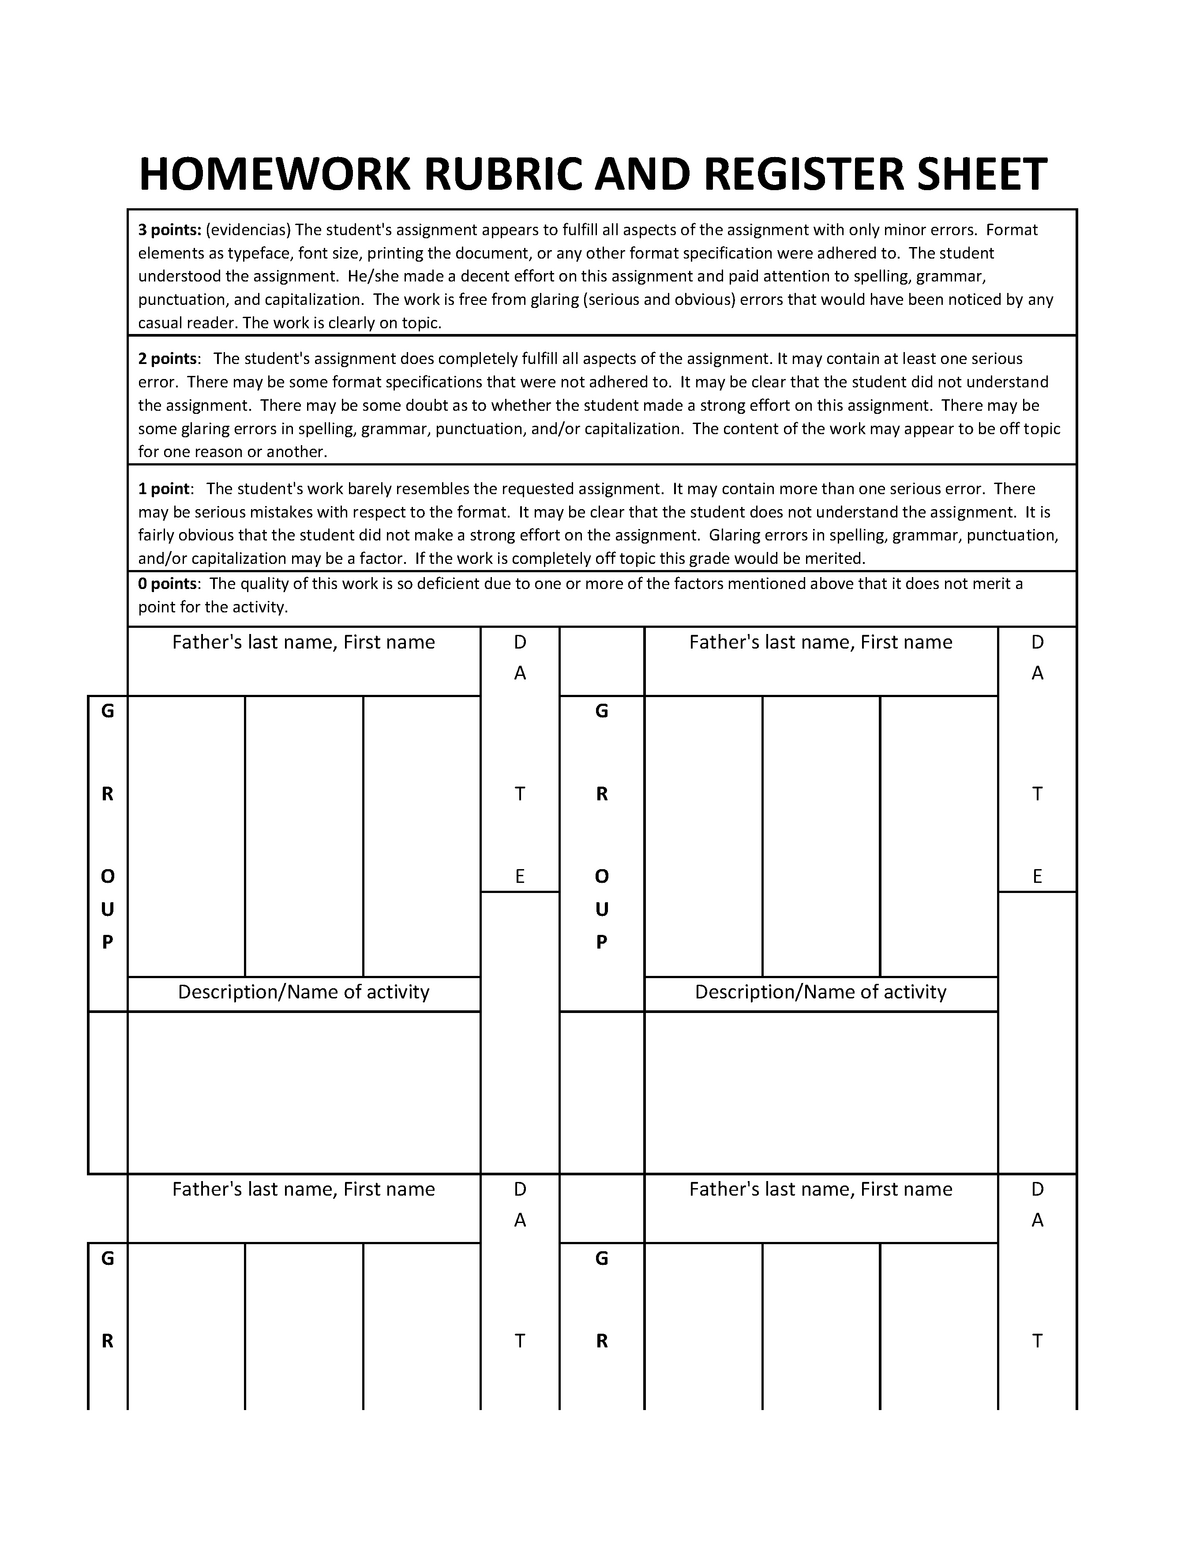 homework rubric pdf